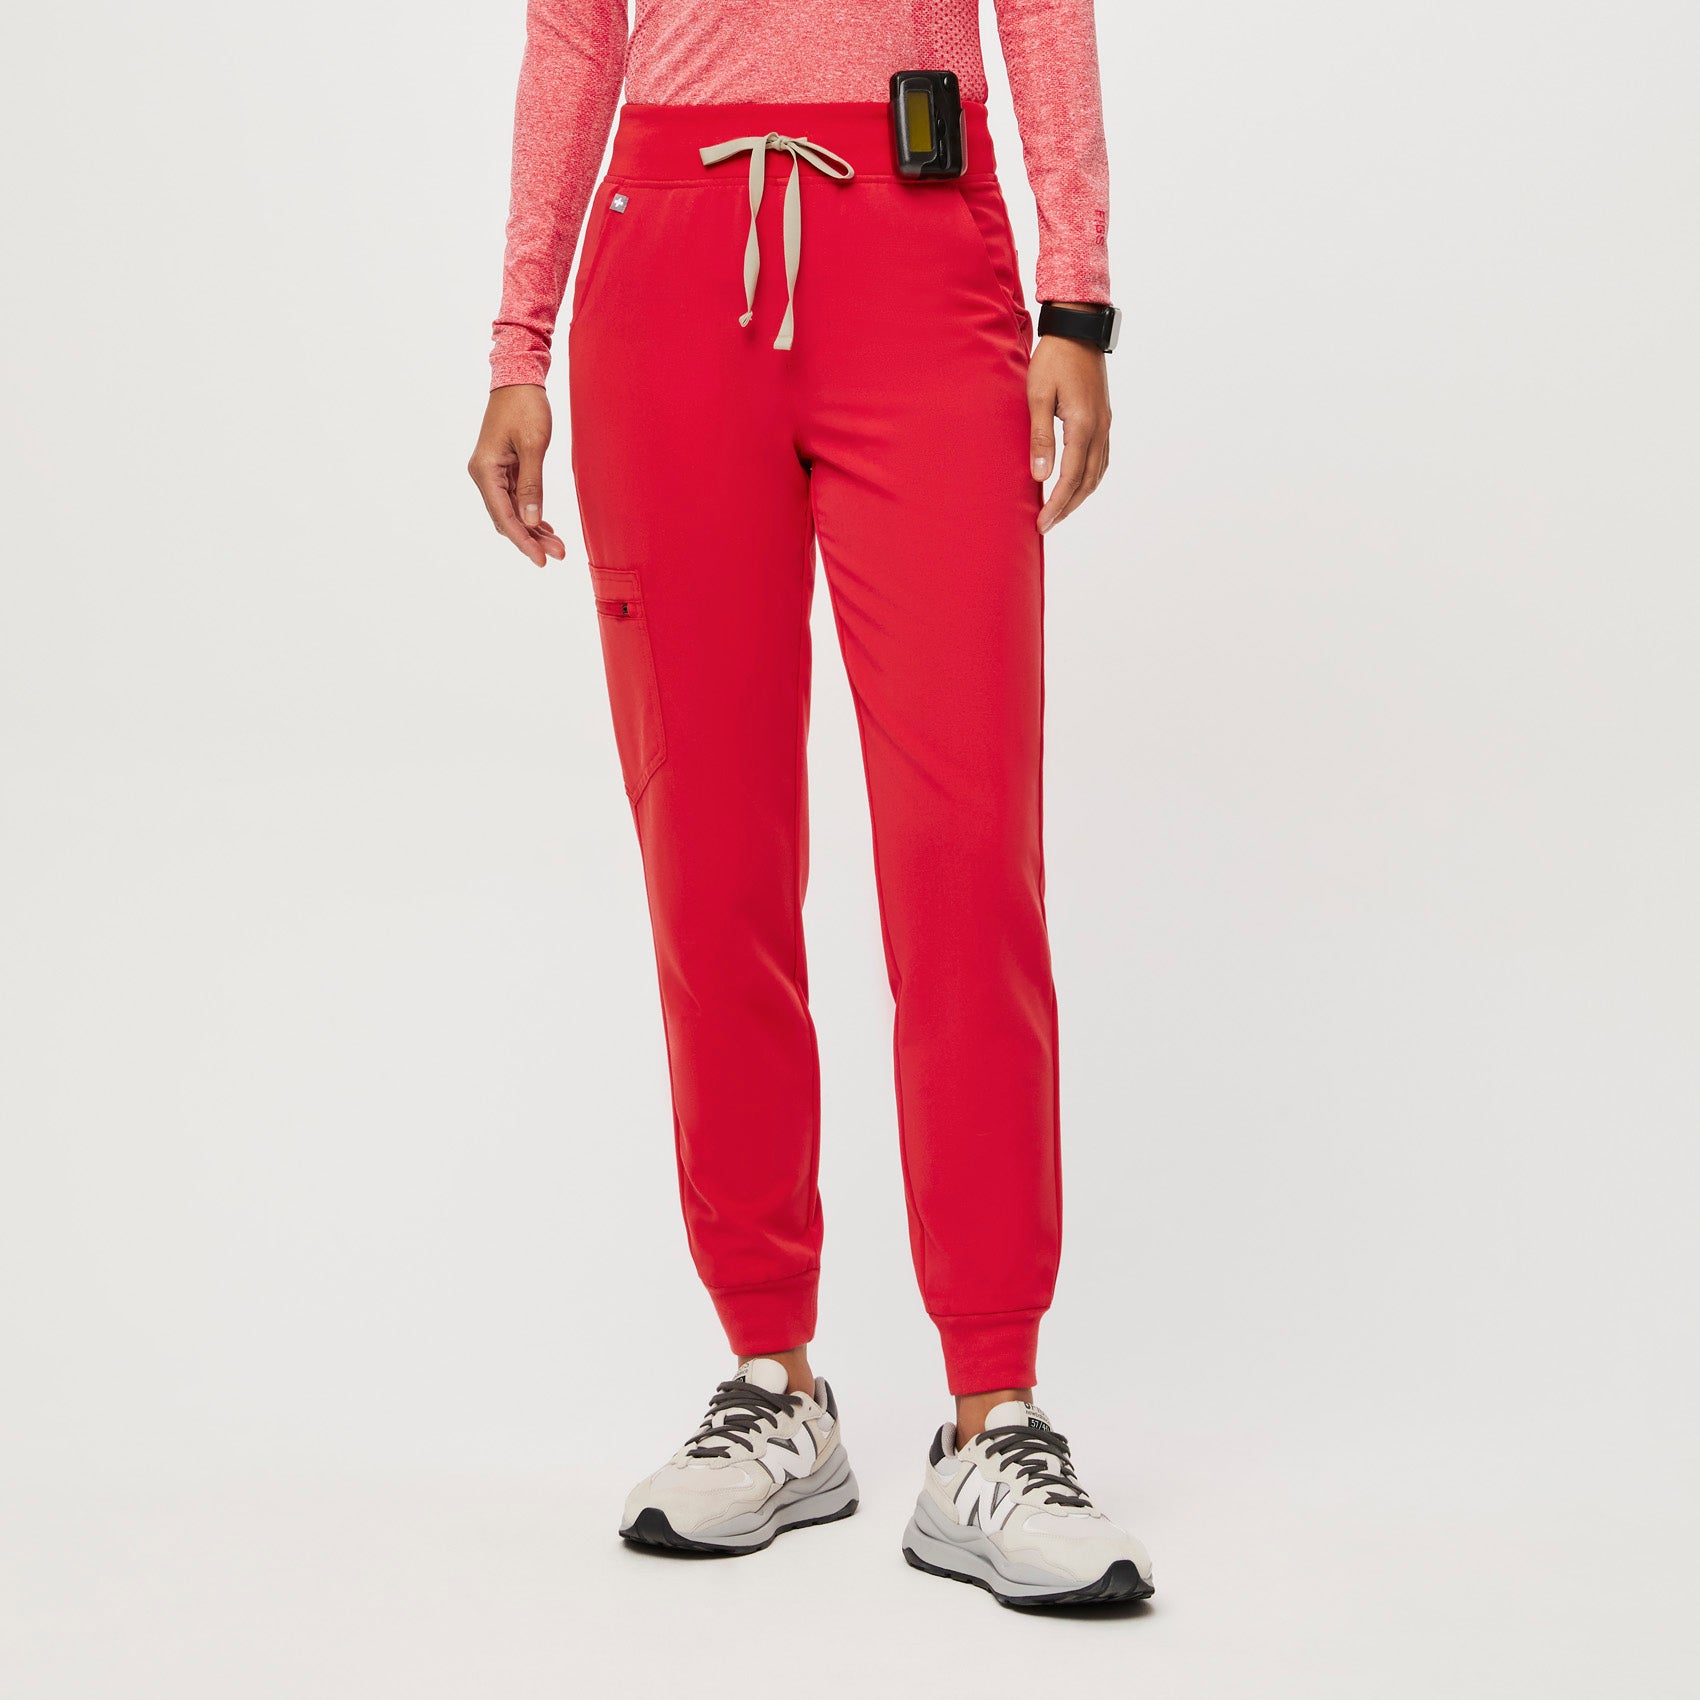 Pantalones deportivos de uniforme médico cintura alta Zamora™ para mujer -  Rojo neón · FIGS